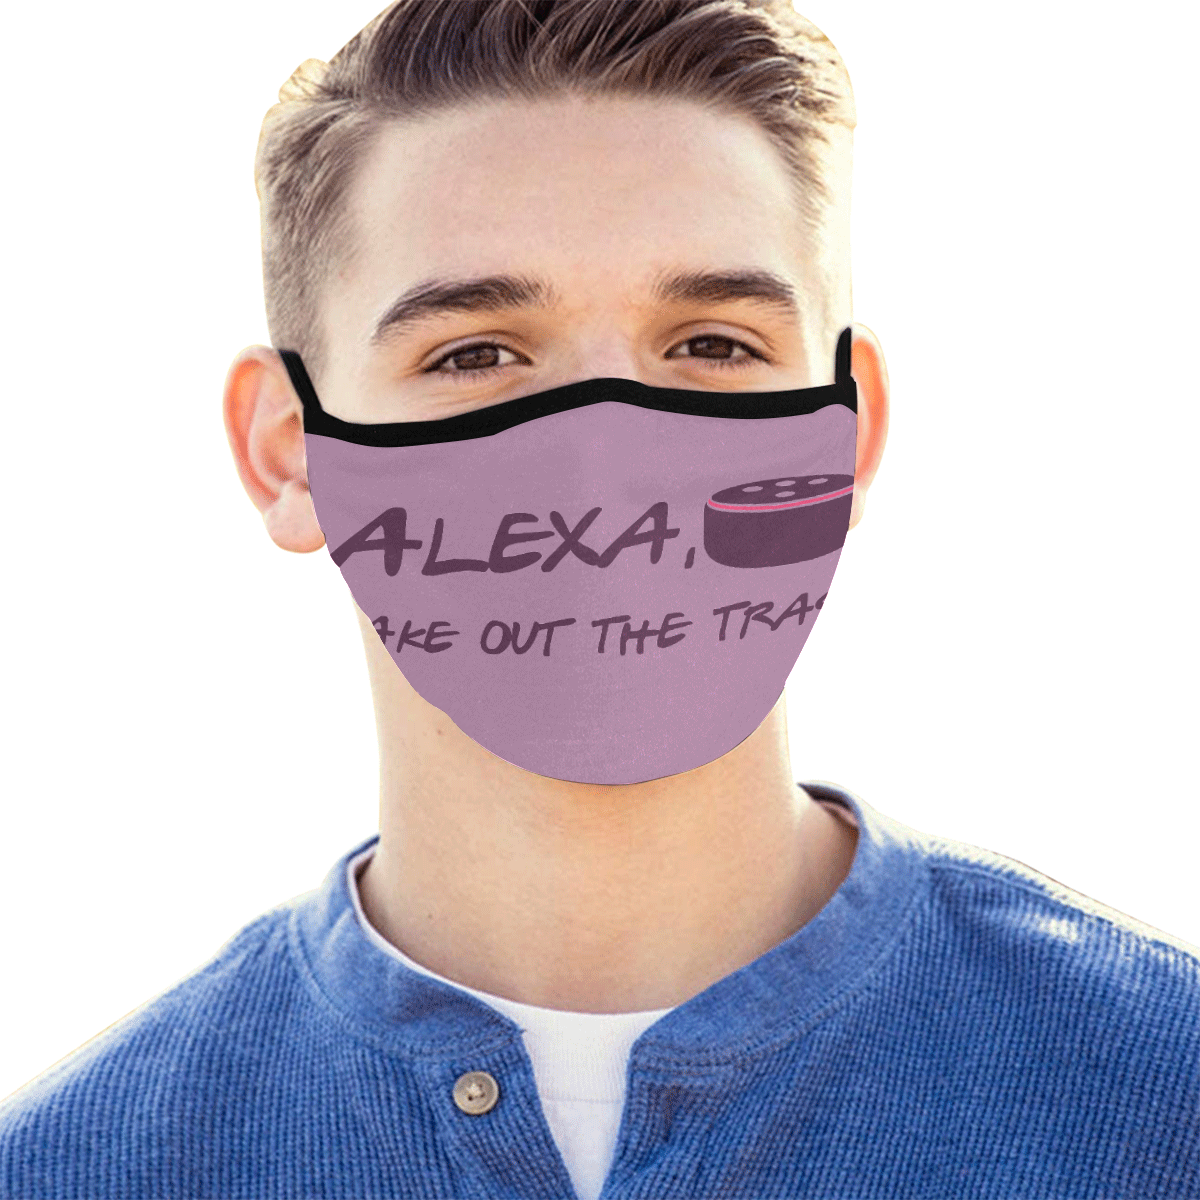 Humor Alexa take out the trash - lavander Mouth Mask